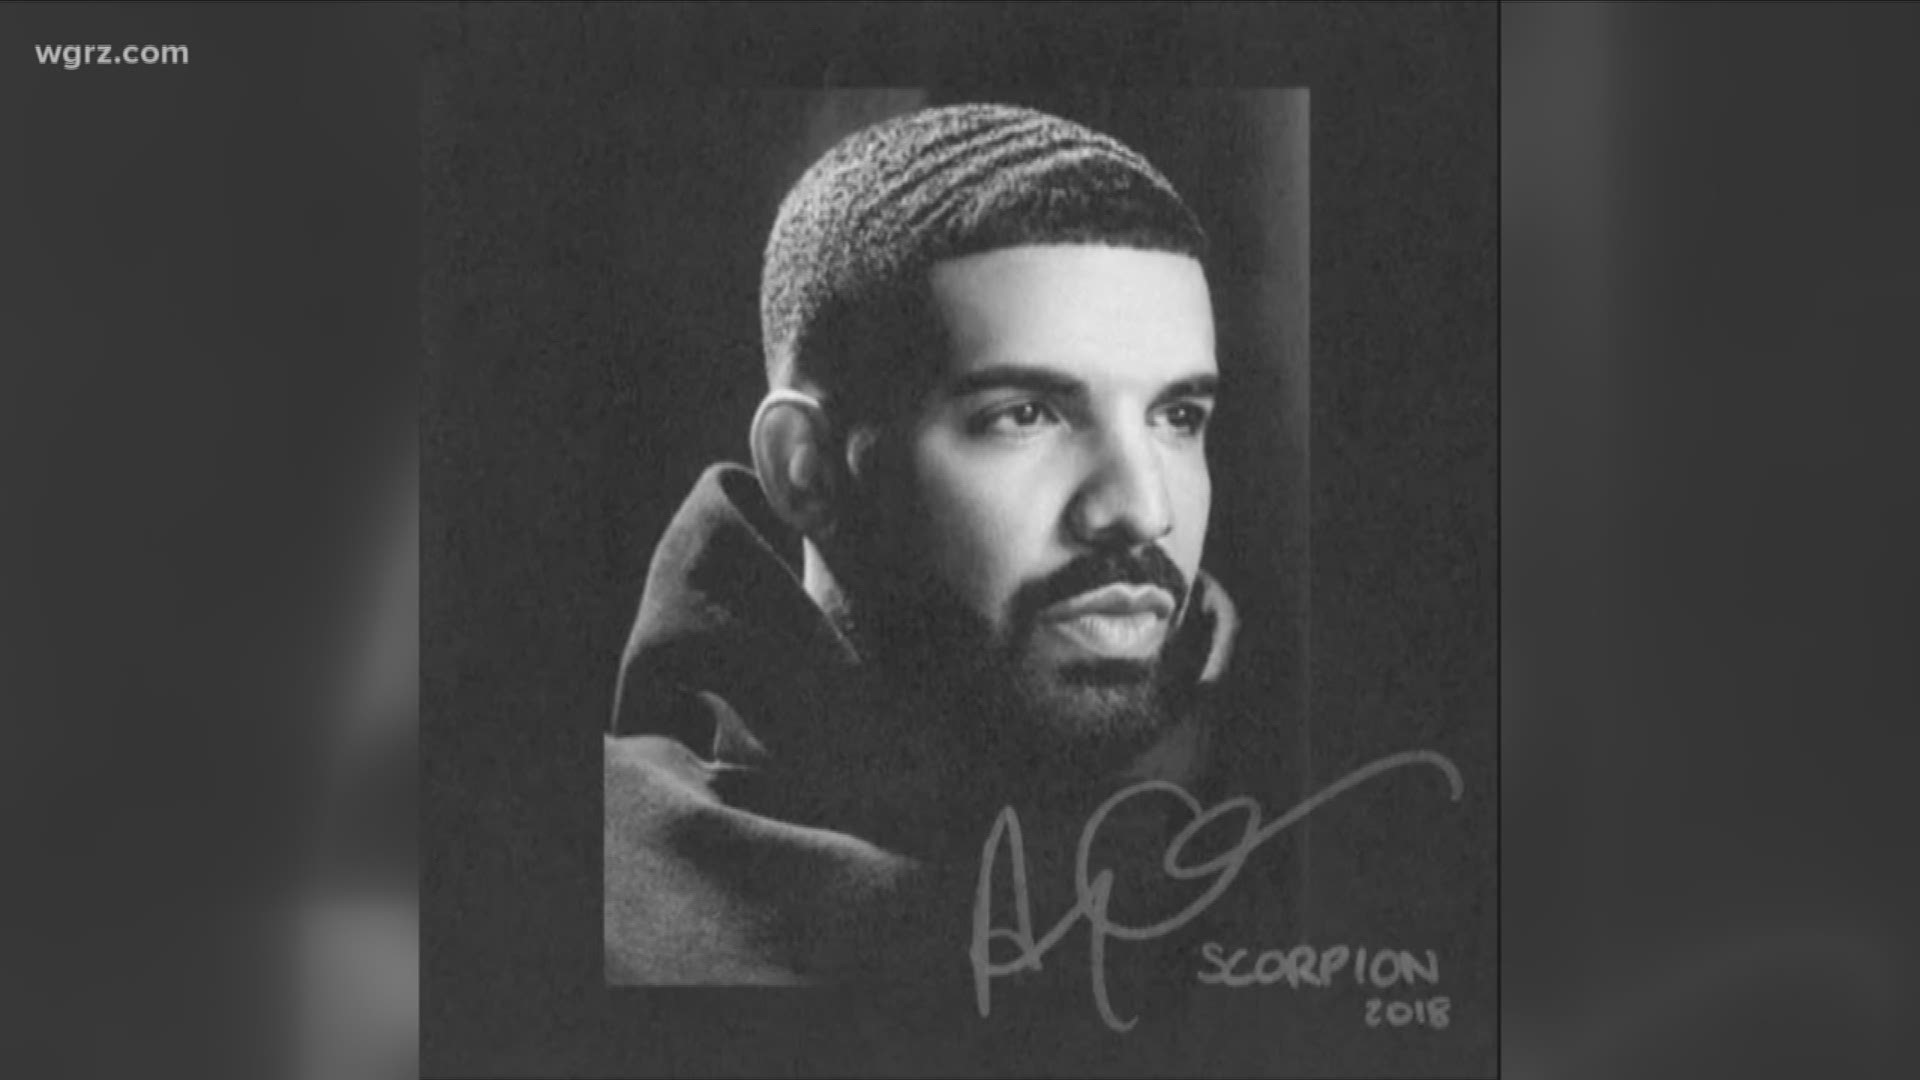 Drake's new album includes WBLK aircheck